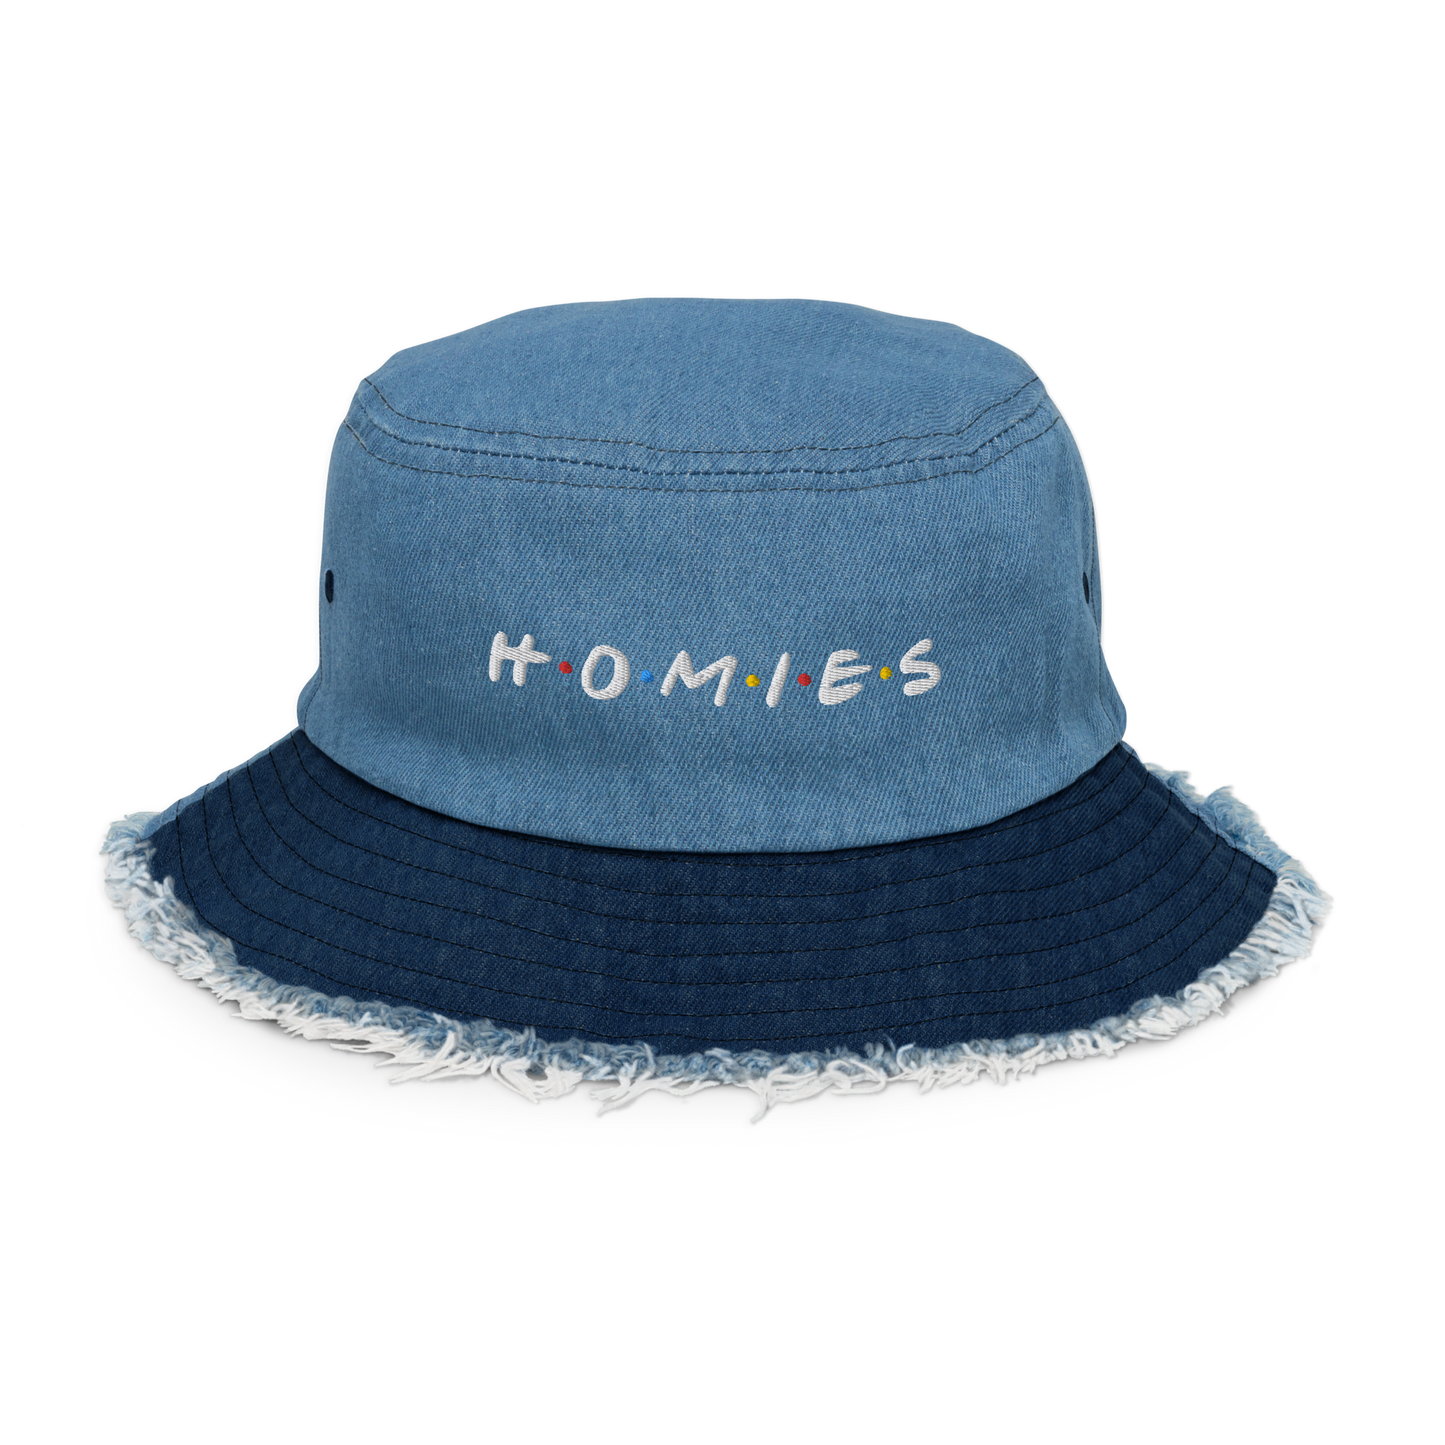 Homies Distressed Denim Bucket Hat